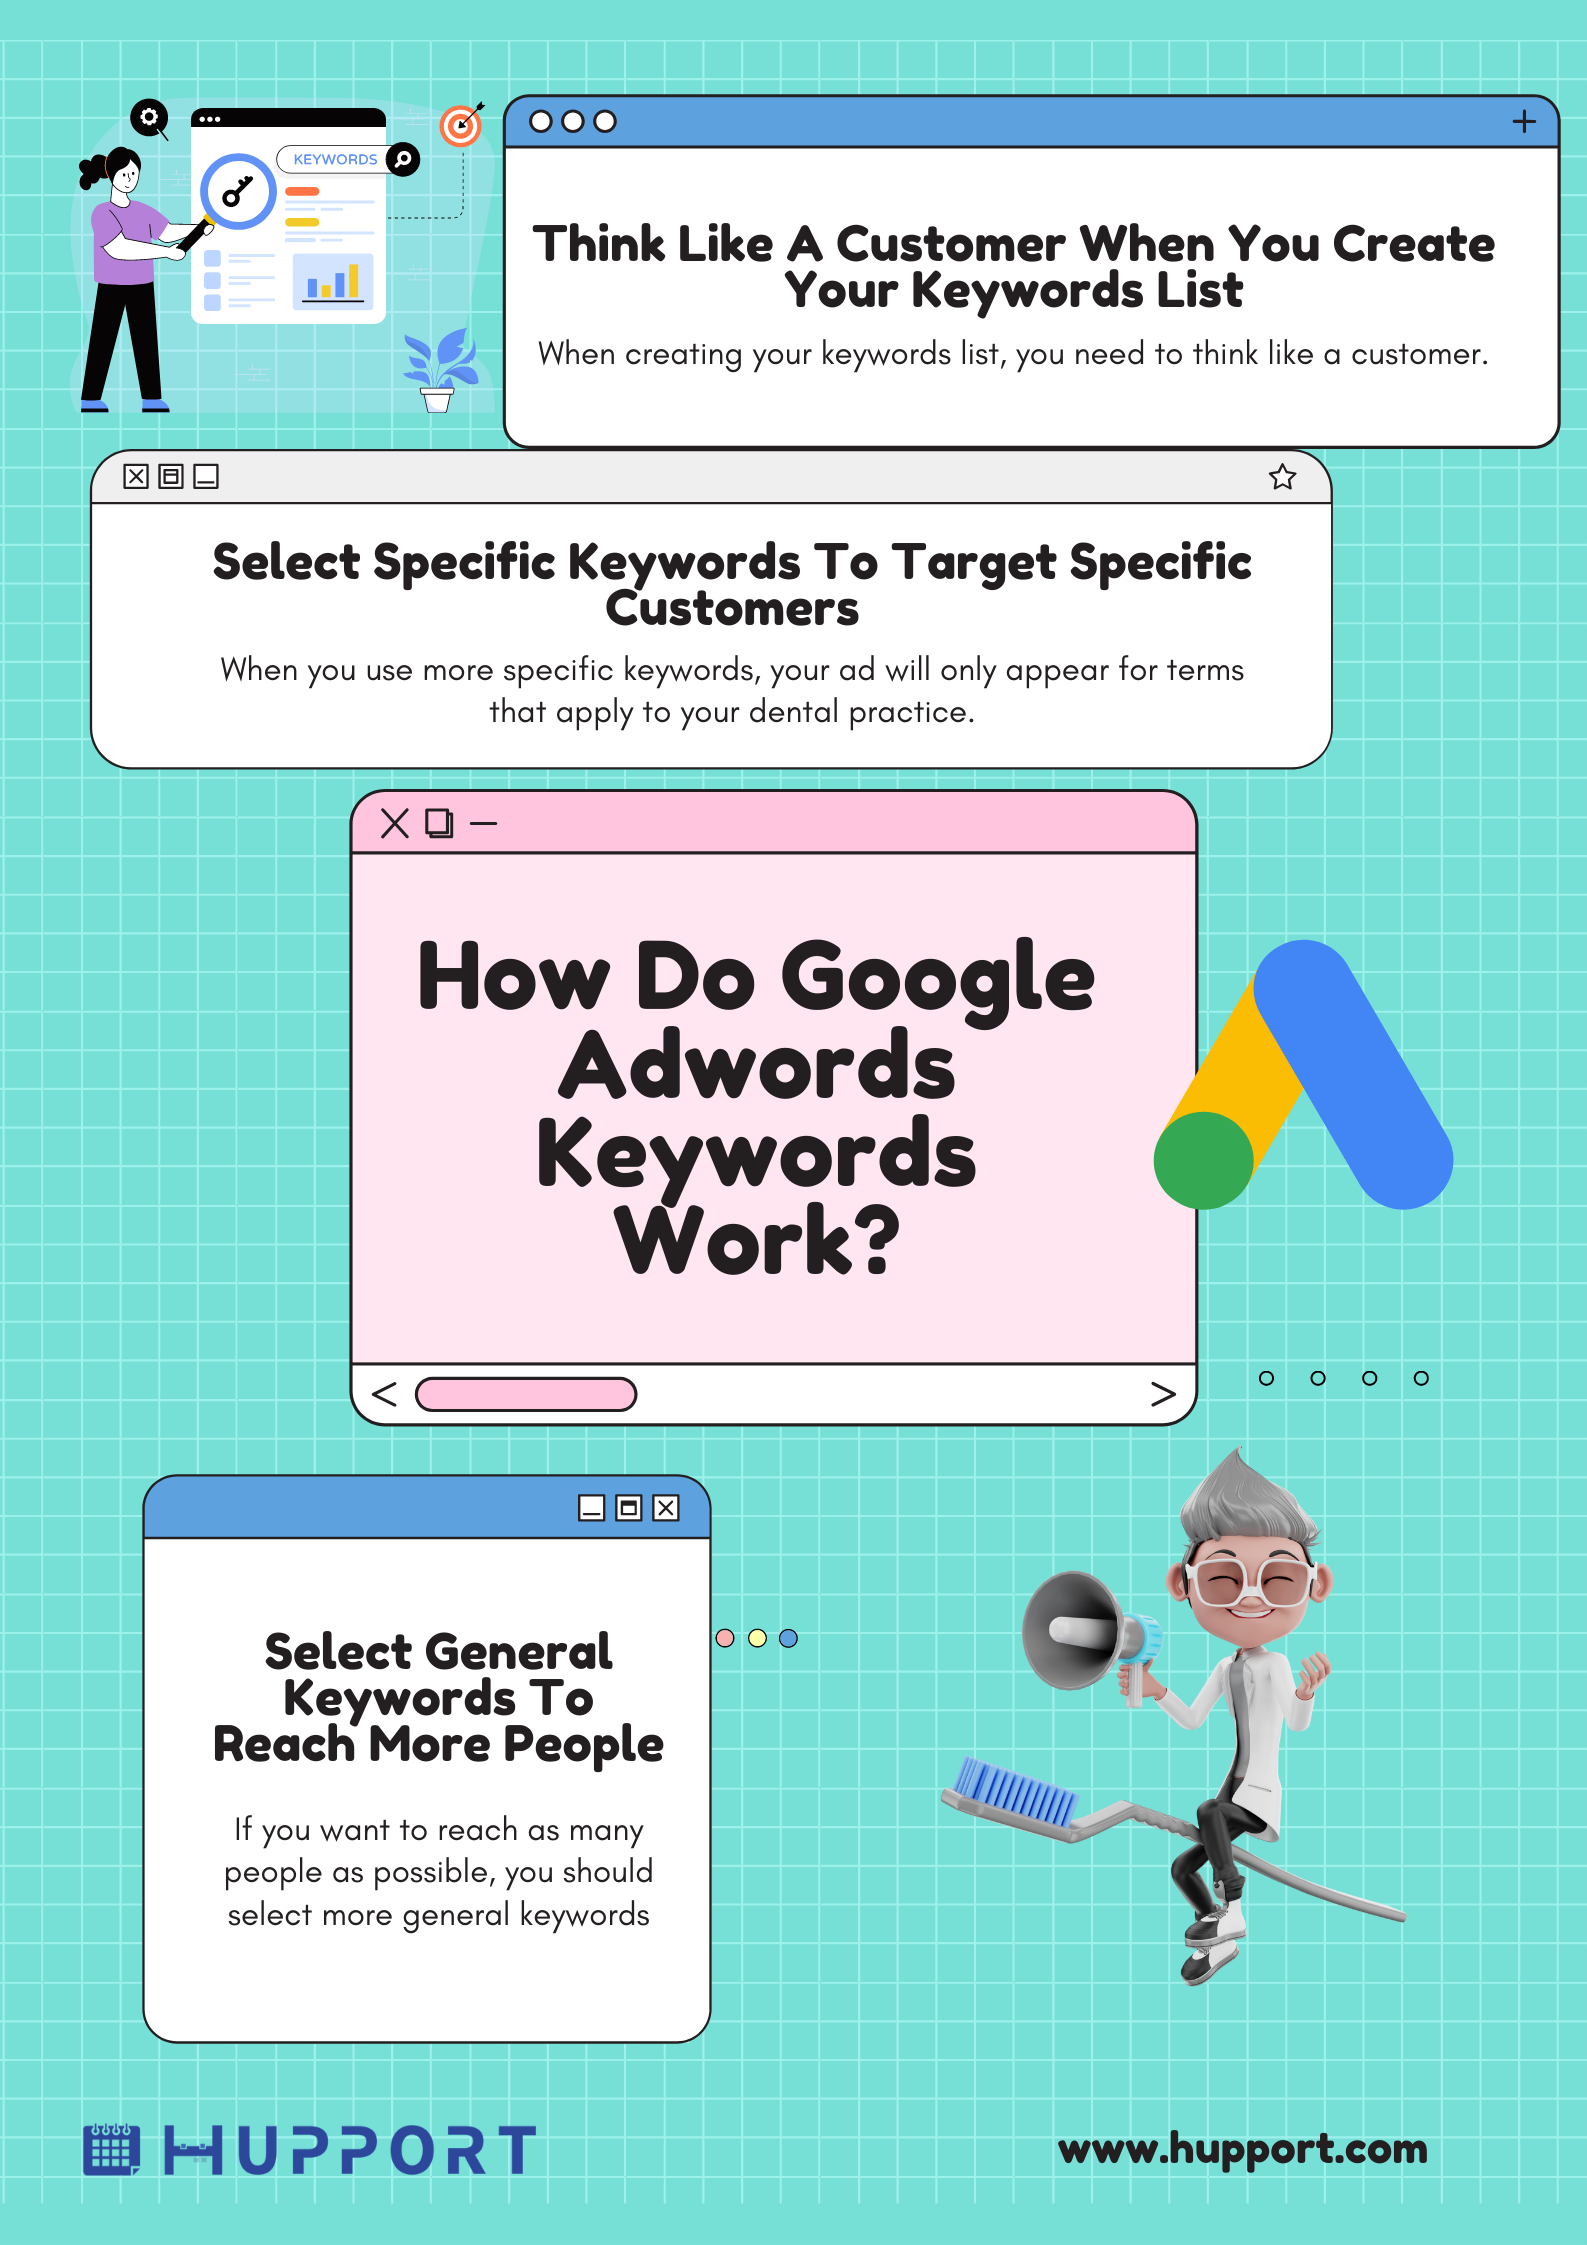 How Do Google Adwords Keywords Work?